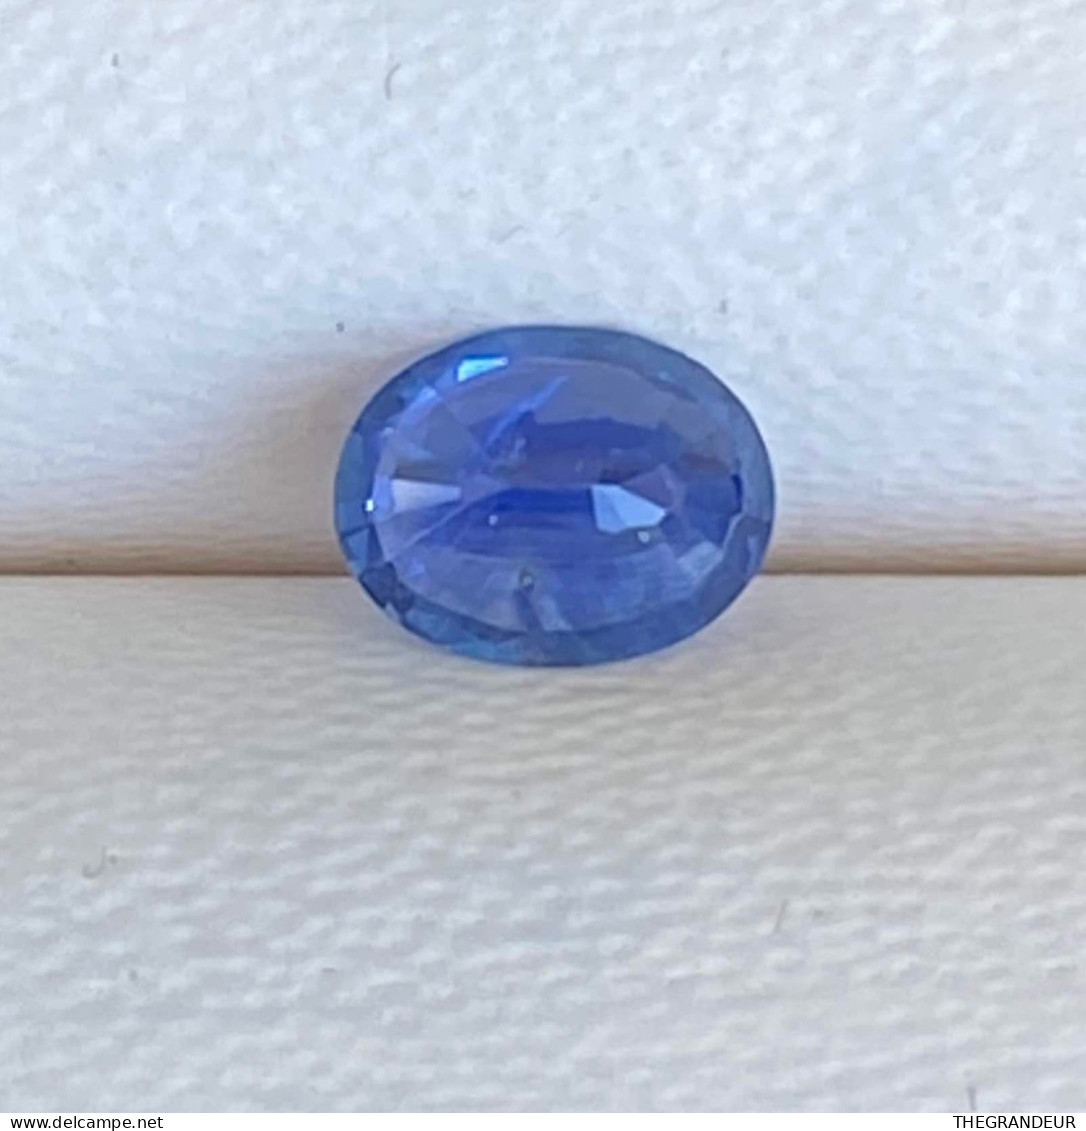 Natural Blue Sapphire Oval Cut 0.76 Carat From Sri Lanka - Zafiro